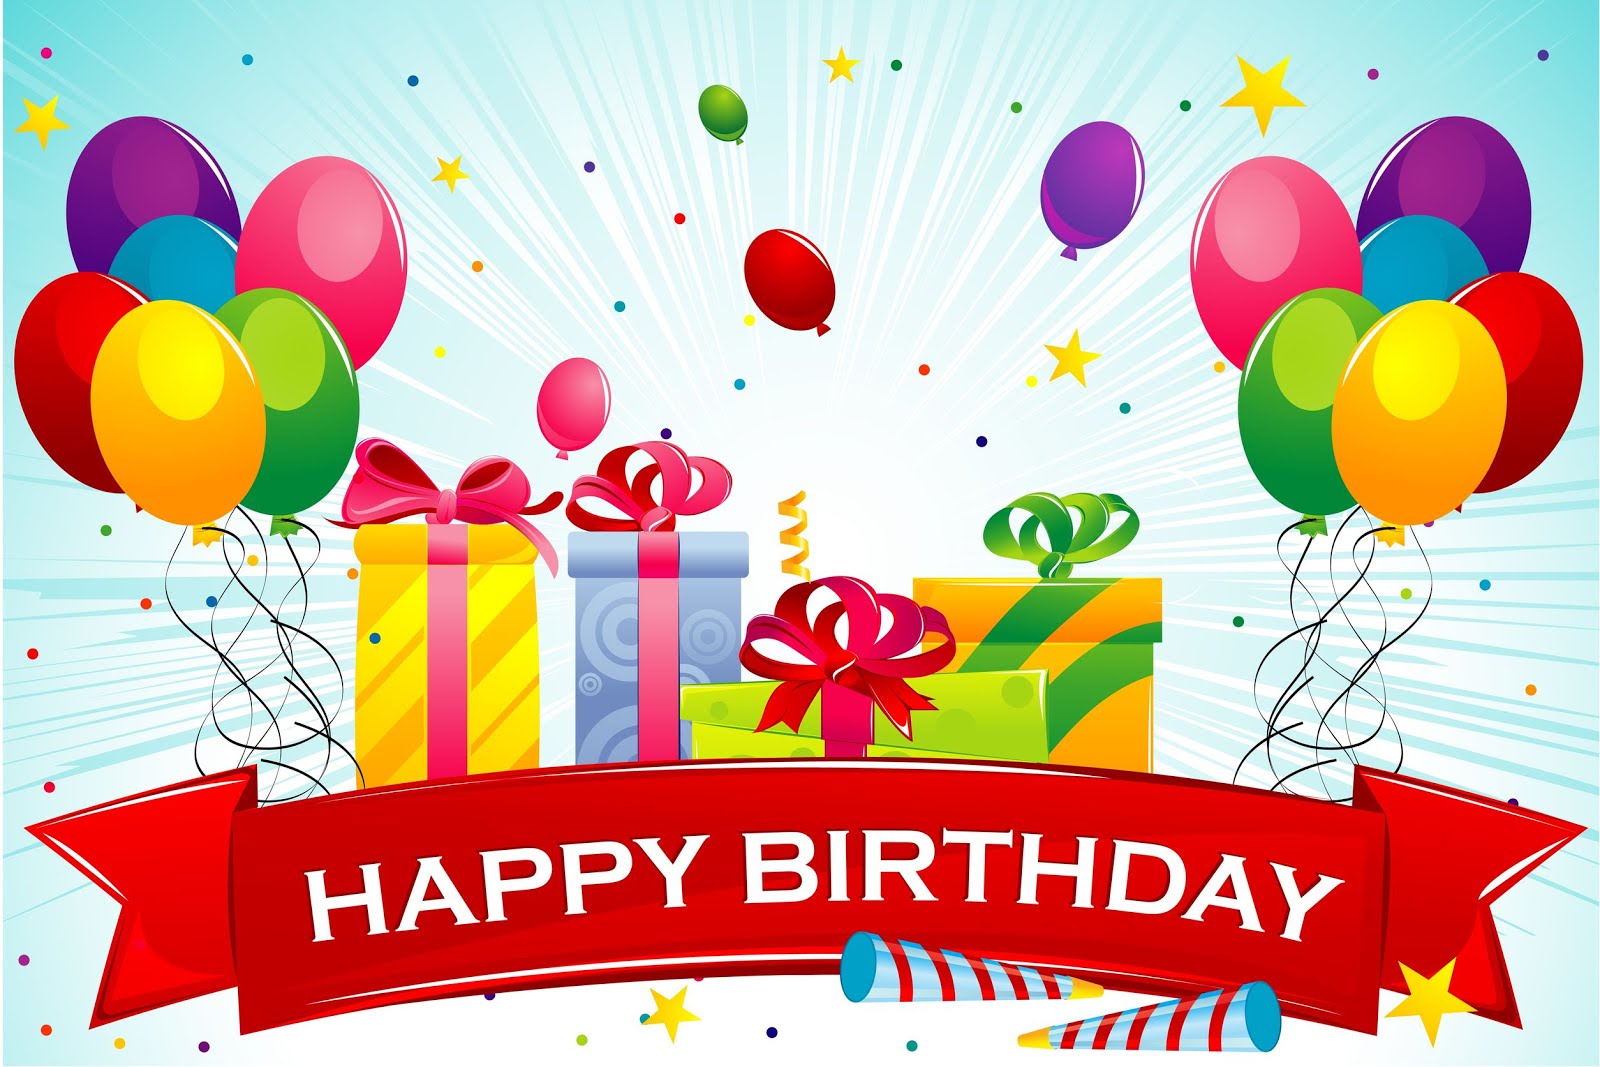 http://www.itsnotaboutme.tv/news/wp/wp-content/uploads/postal_de_cumplea_os_con_mensaje_happy_birthday_para_compartir.jpg